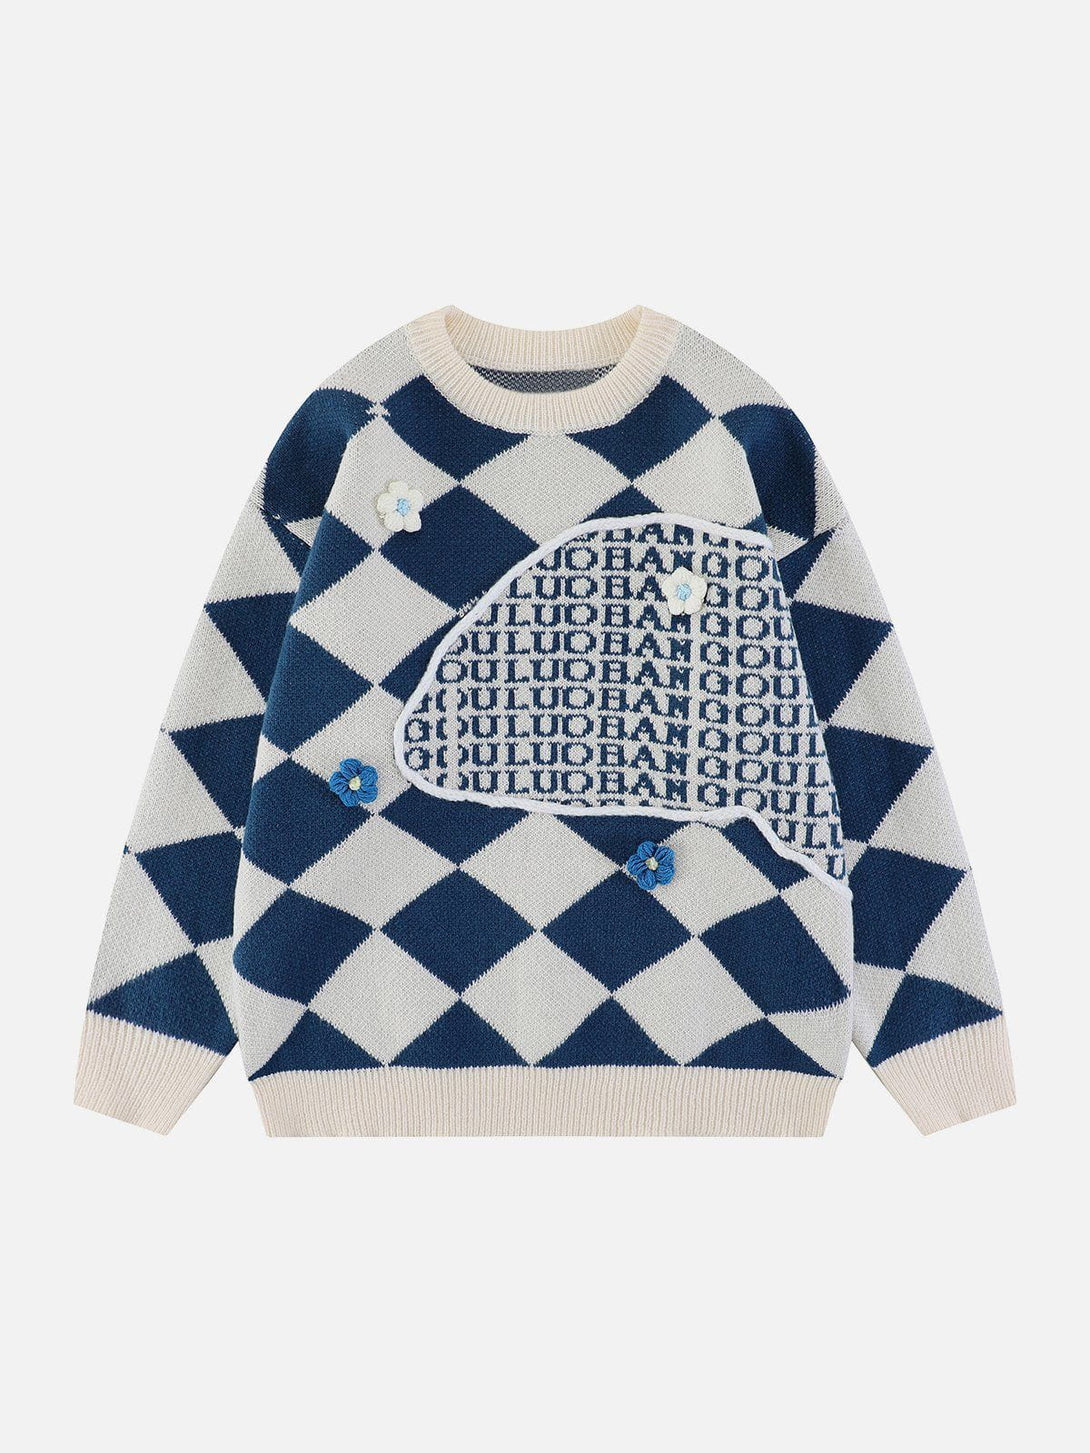 Majesda® - PLAID Patchwork Sweater outfit ideas streetwear fashion